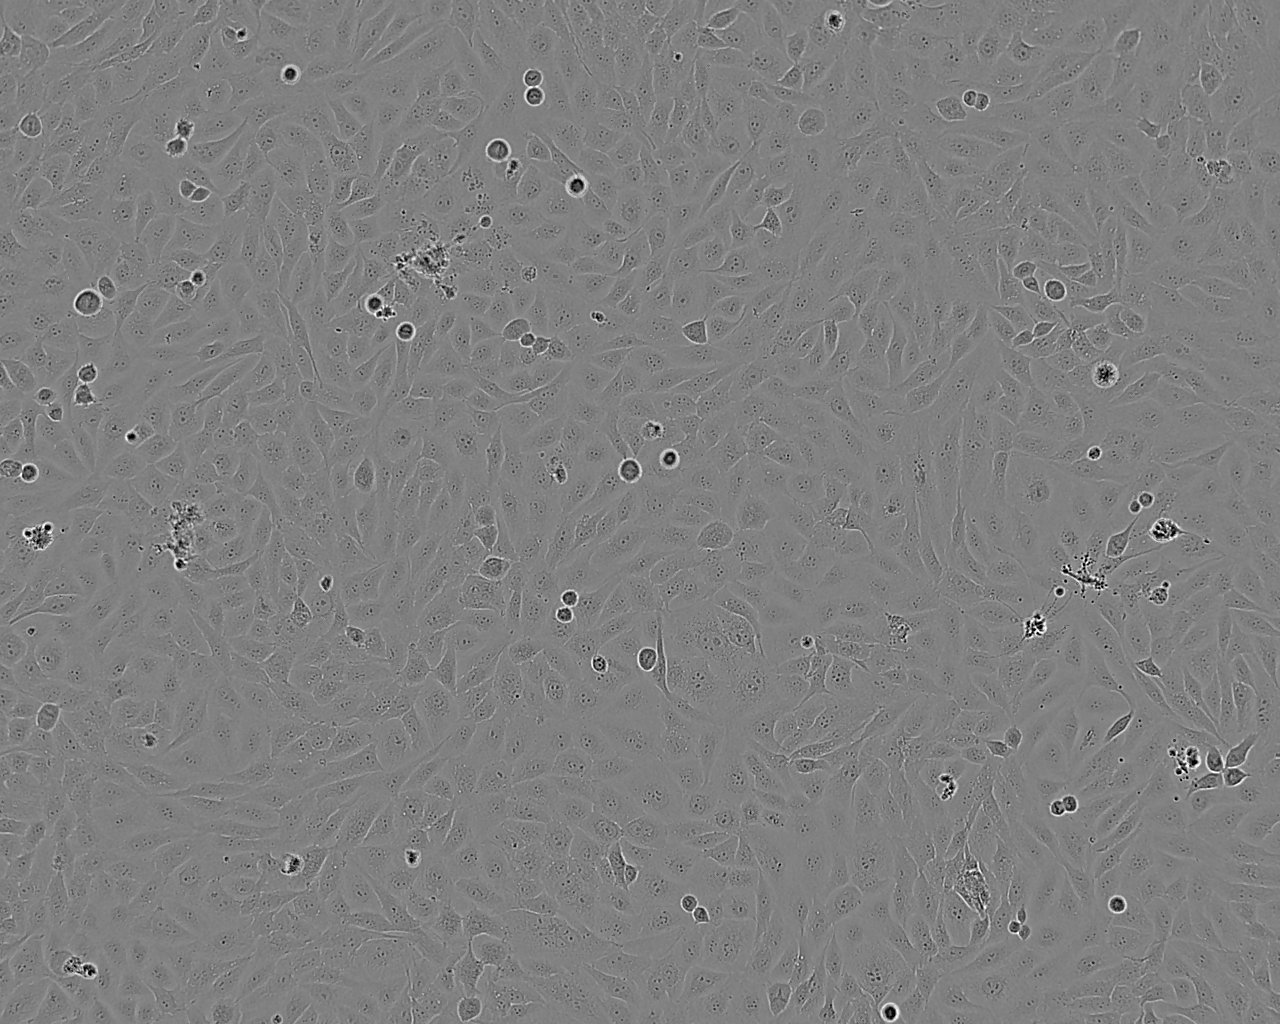 U-251MG epithelioid cells人神经胶质瘤细胞系